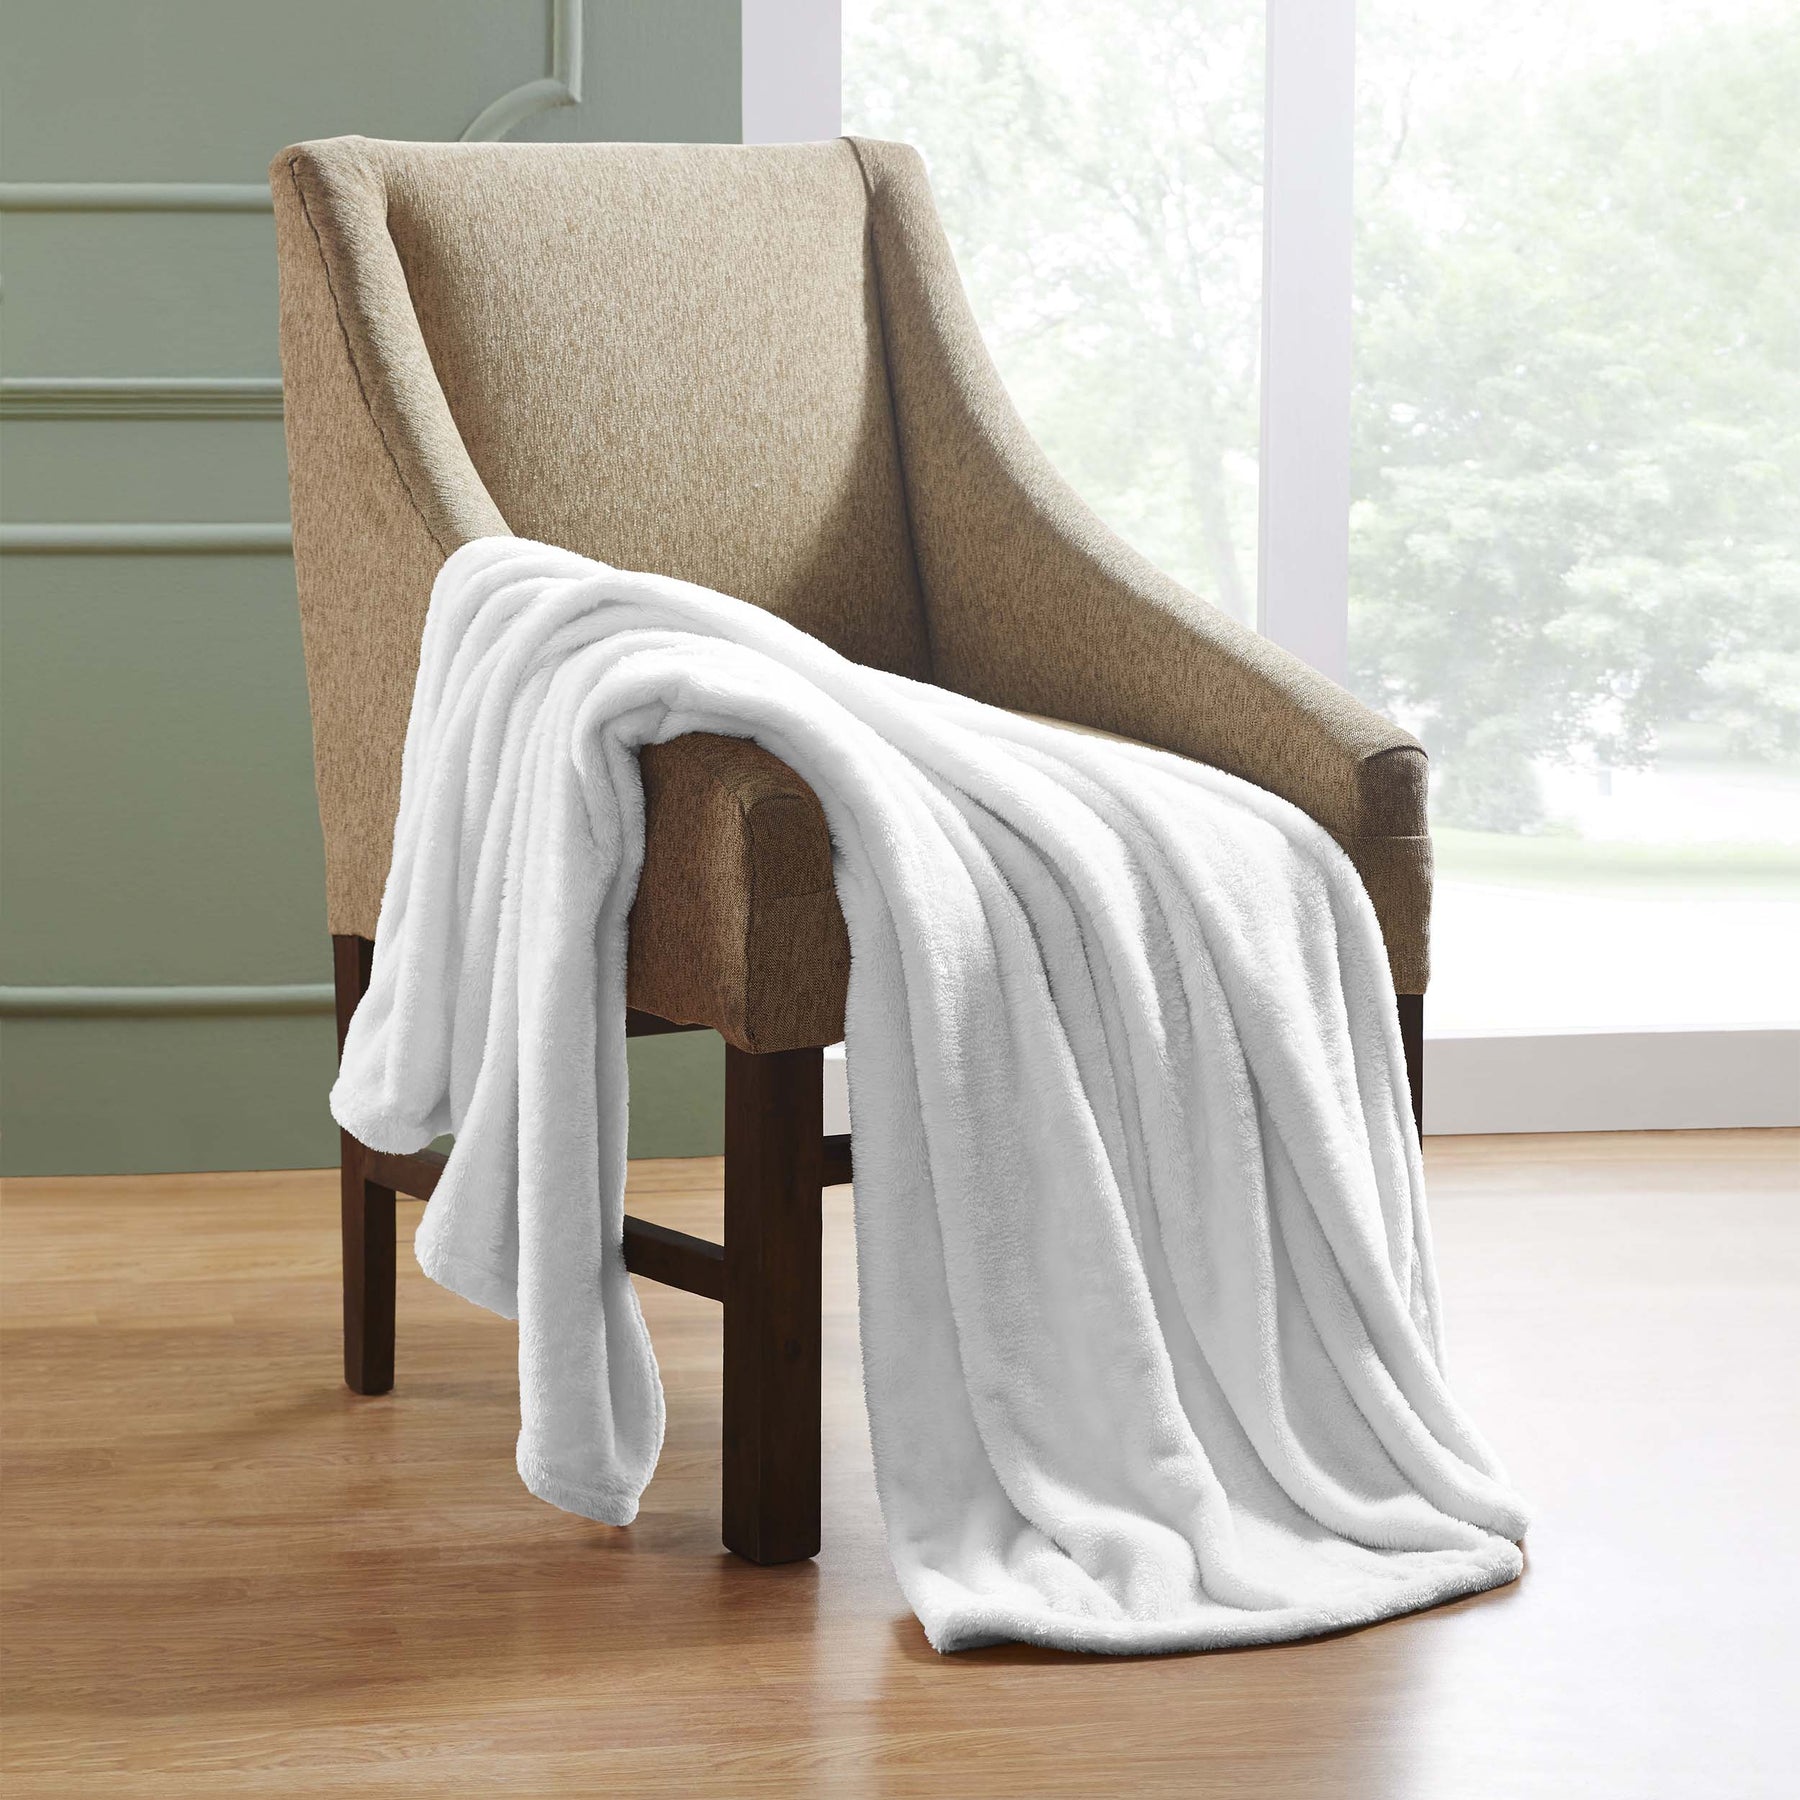 Superior Fleece Plush Medium Weight Fluffy Soft Decorative Solid Blanket - White